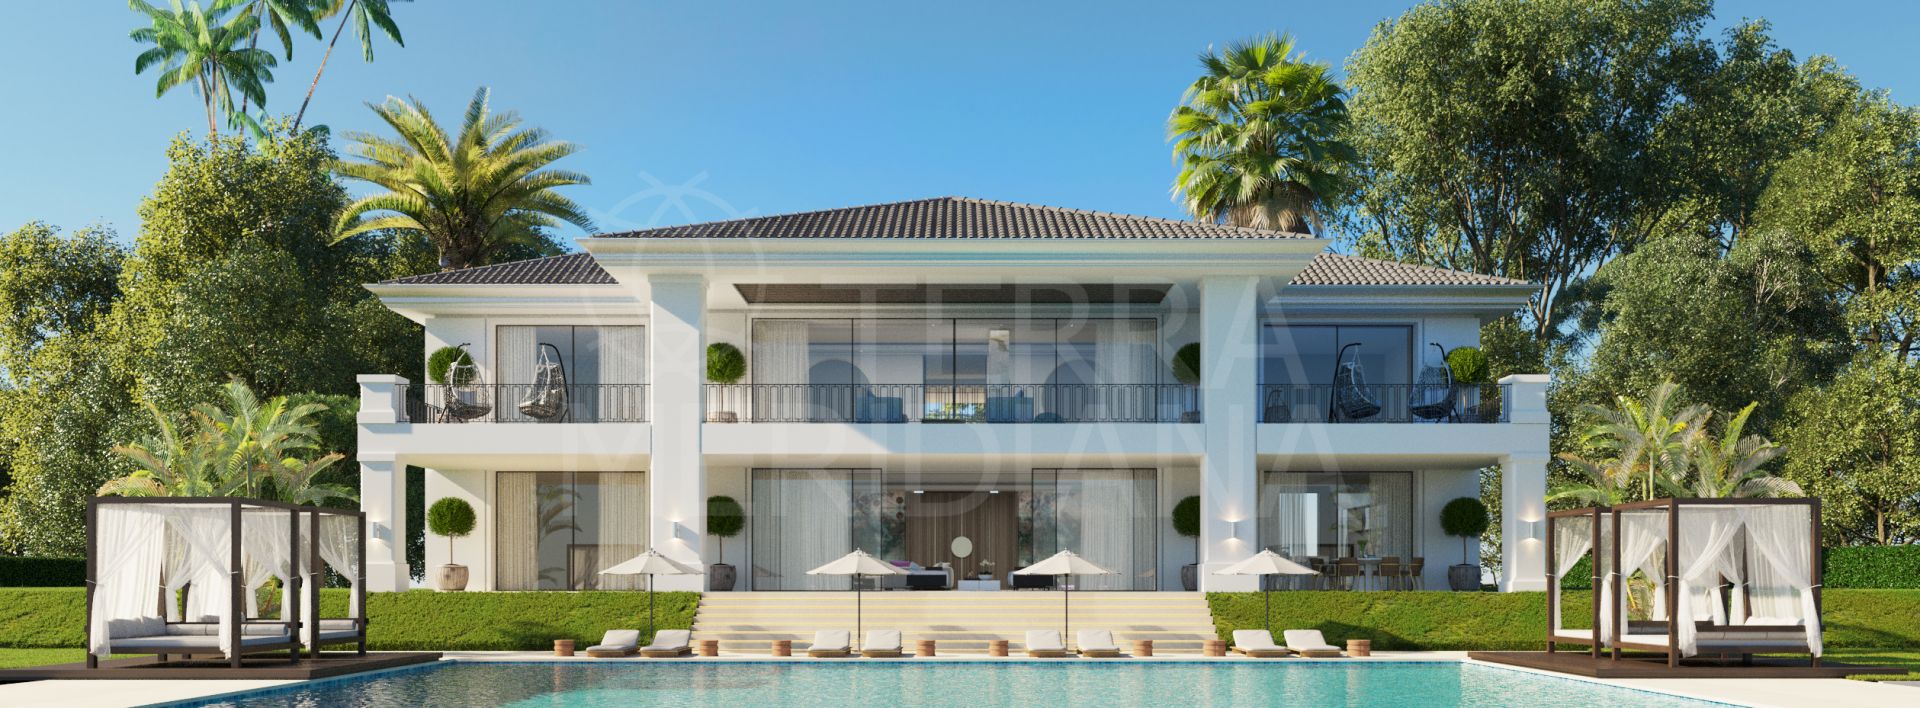 Elegantly envisioned frontline golf villa for sale in sought-after La Alqueria, Benahavis